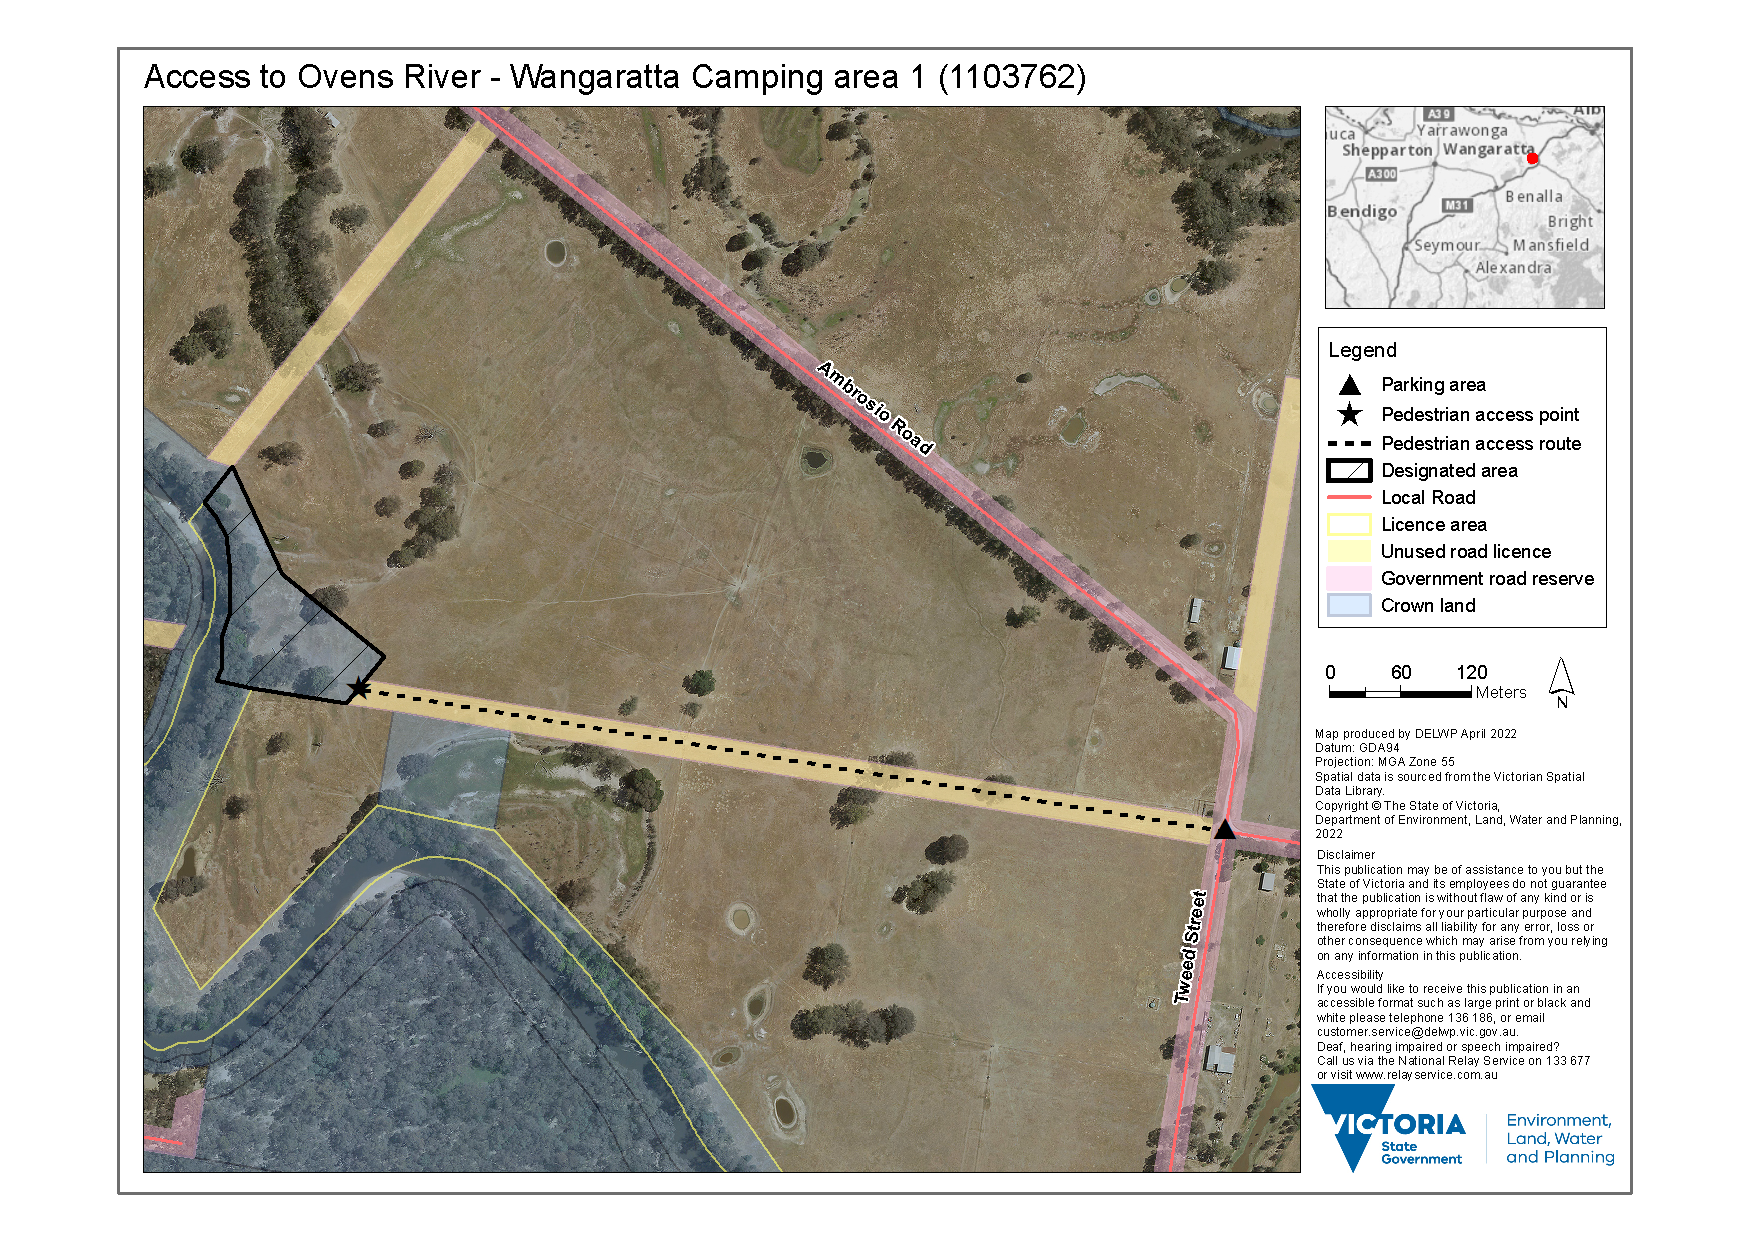 Ovens River - Wangaratta camping area 1 map